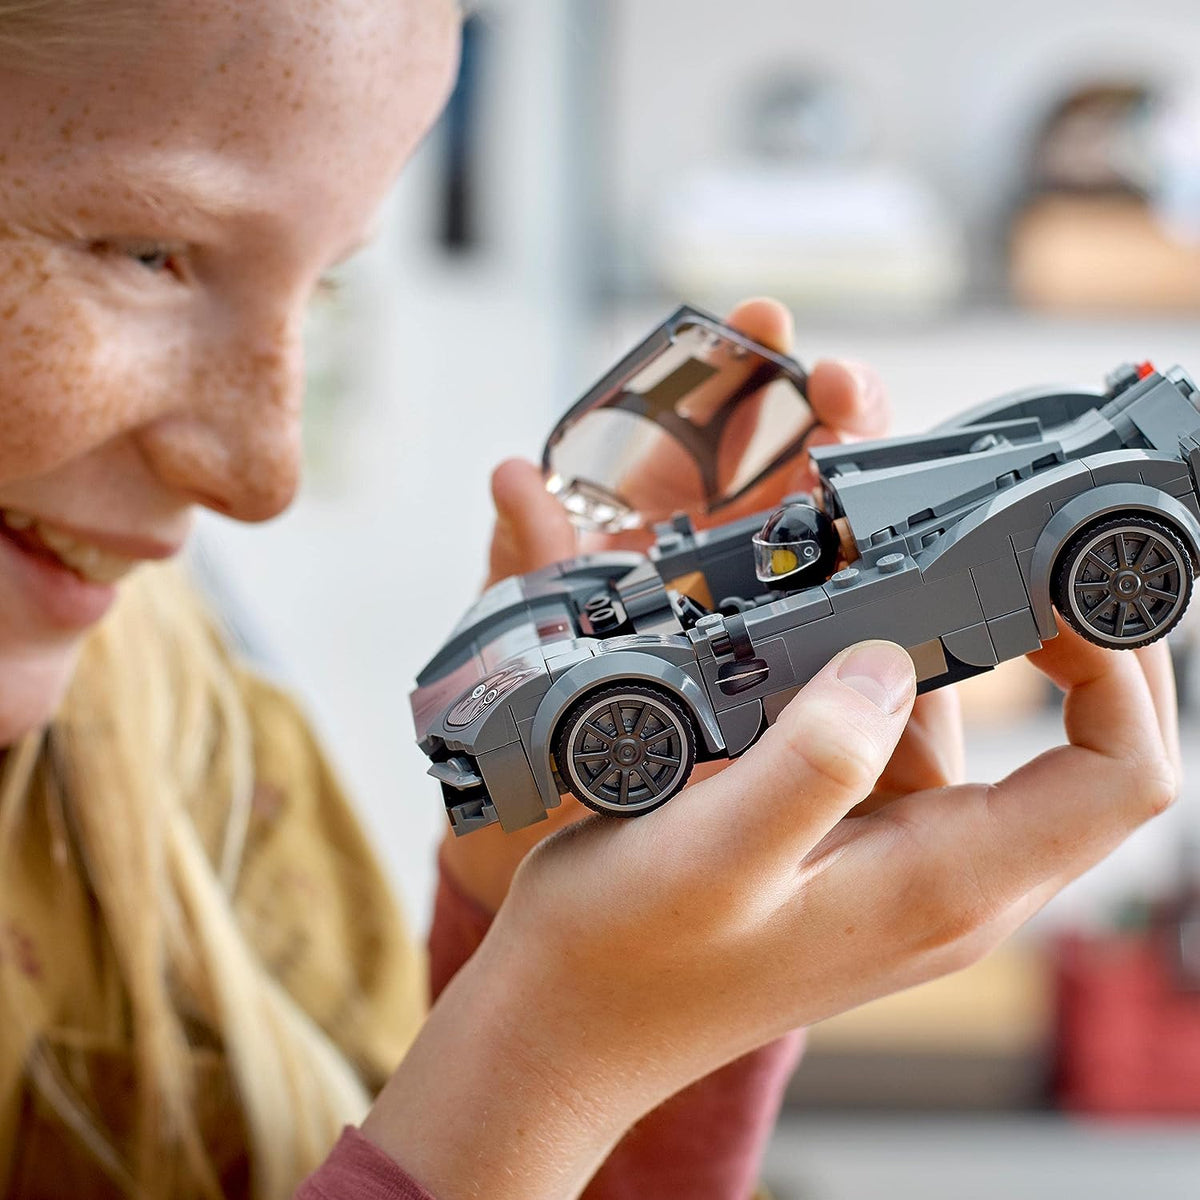 LEGO Speed Champions 76915 Pagani Utopia Model Race Car Toy